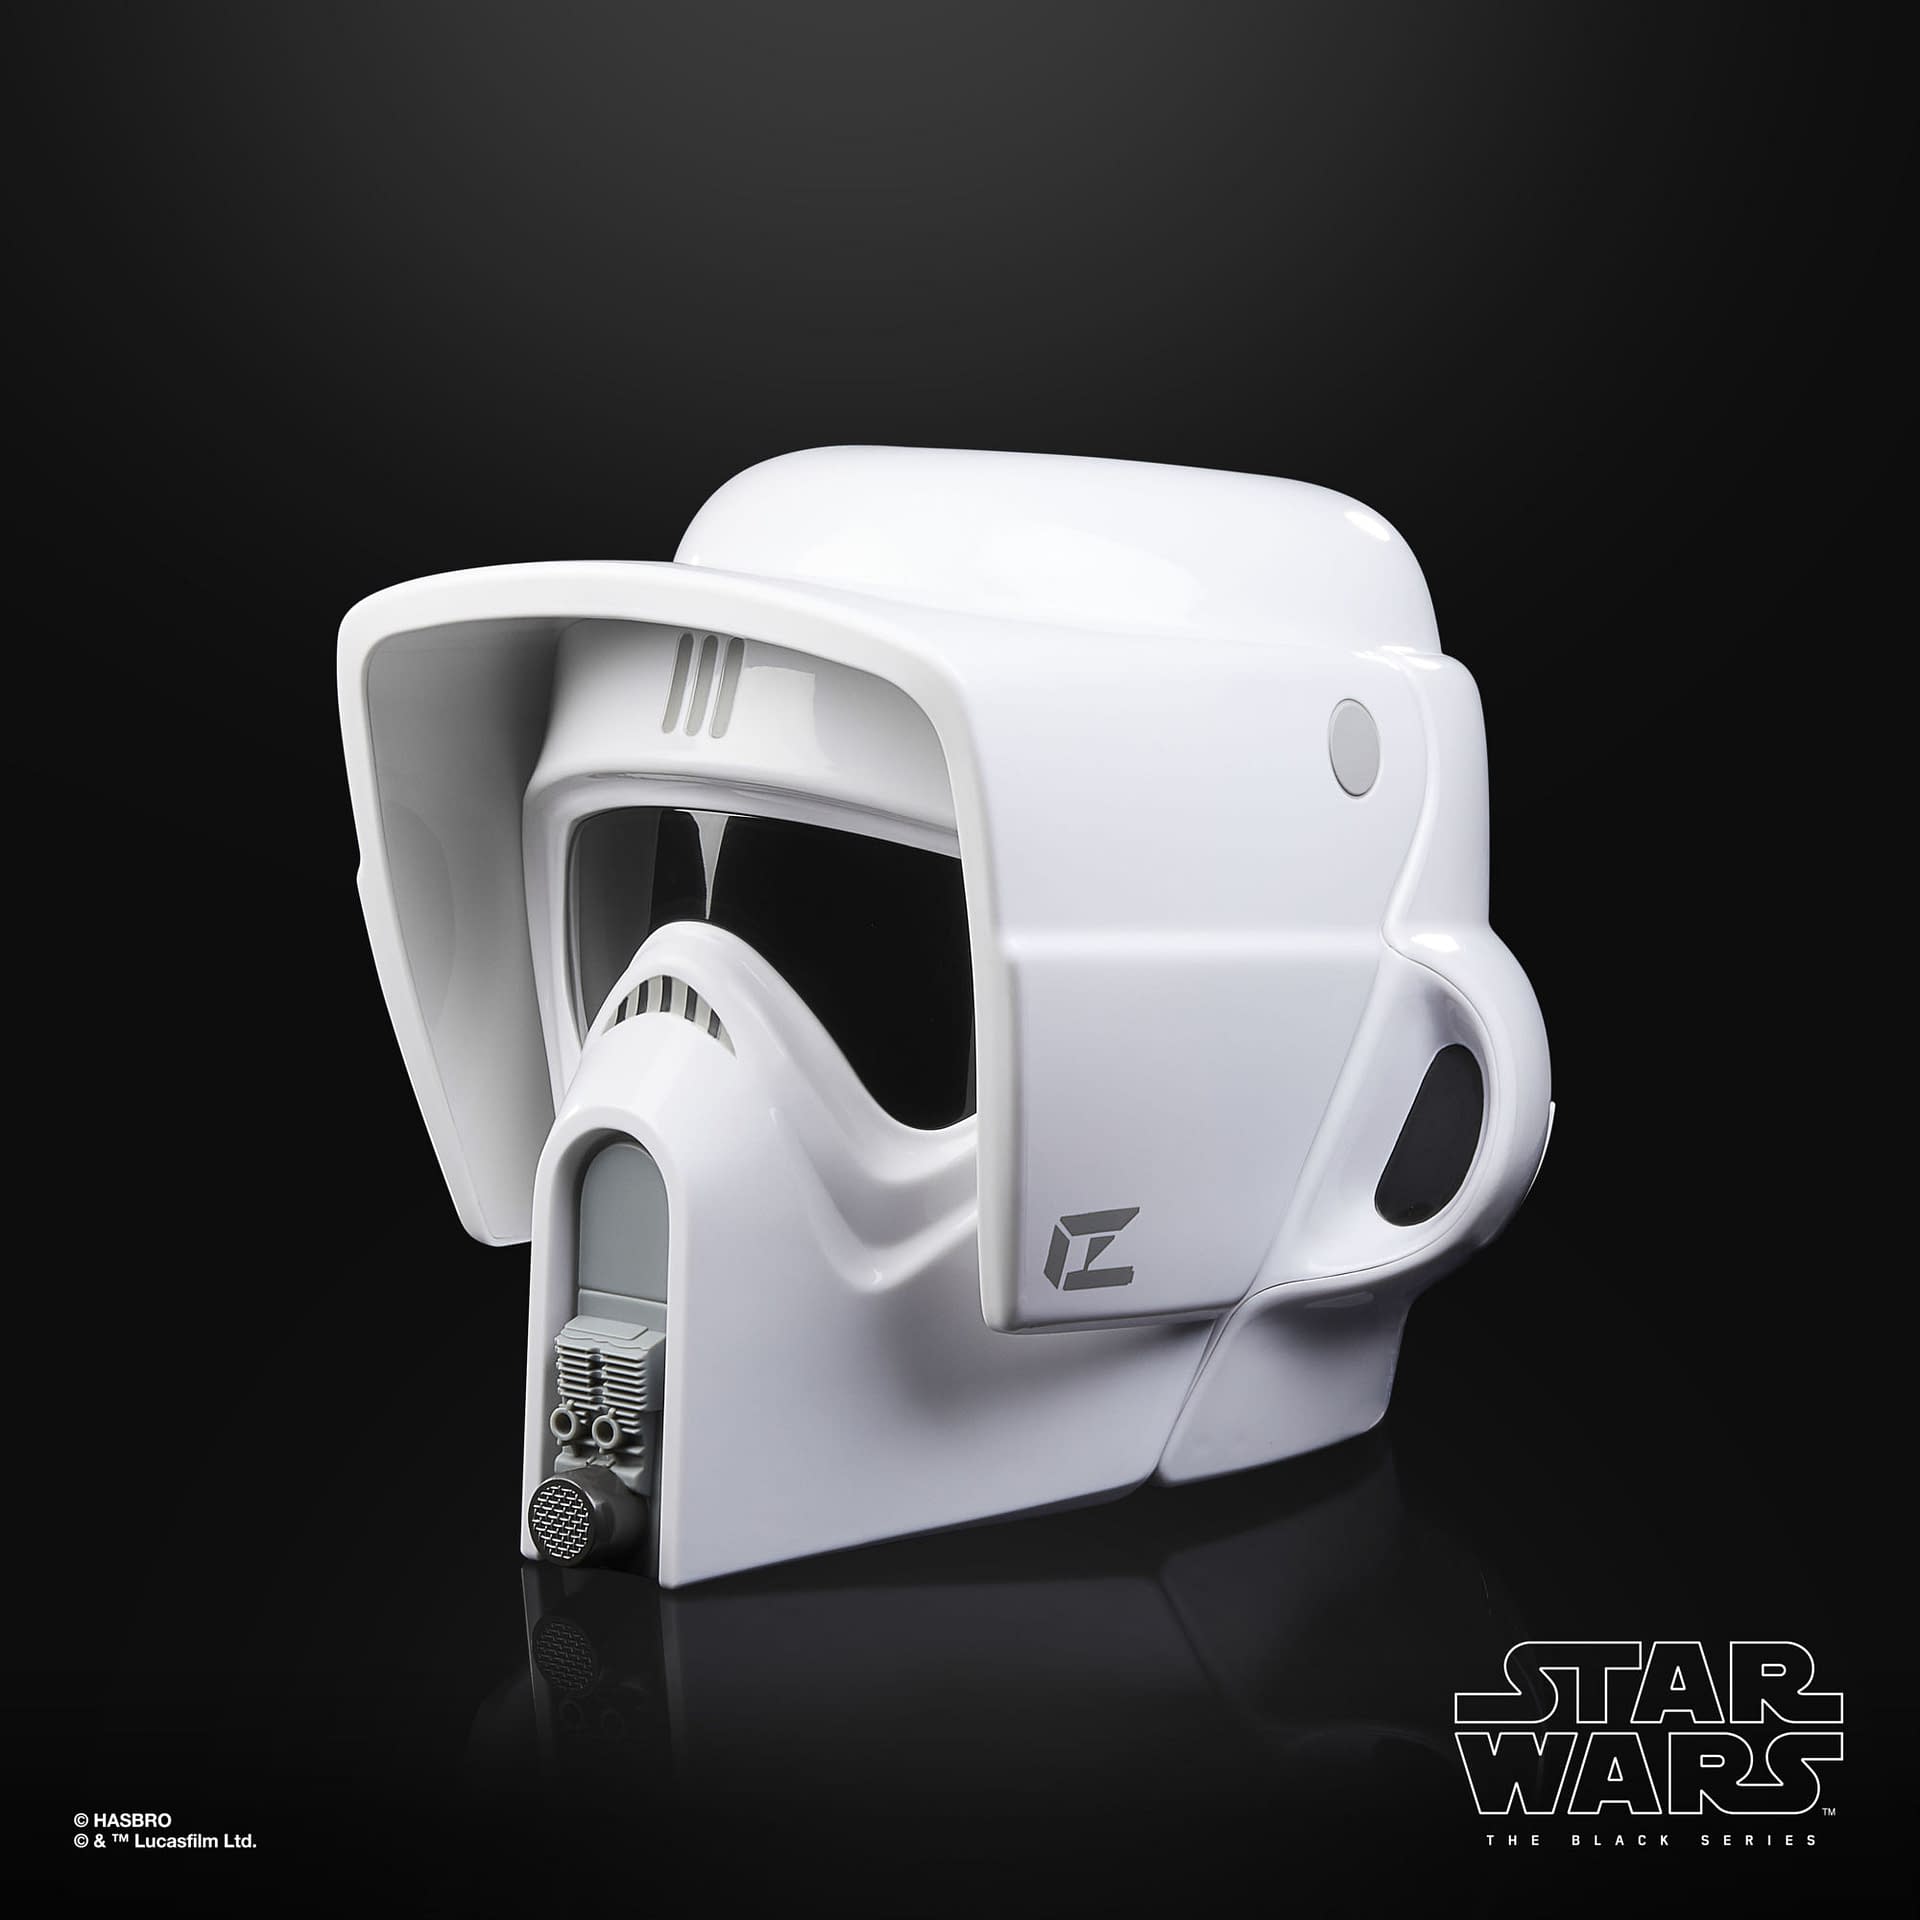 Star Wars Replica Scout Trooper Helmet Deploying Soon from Hasbro 